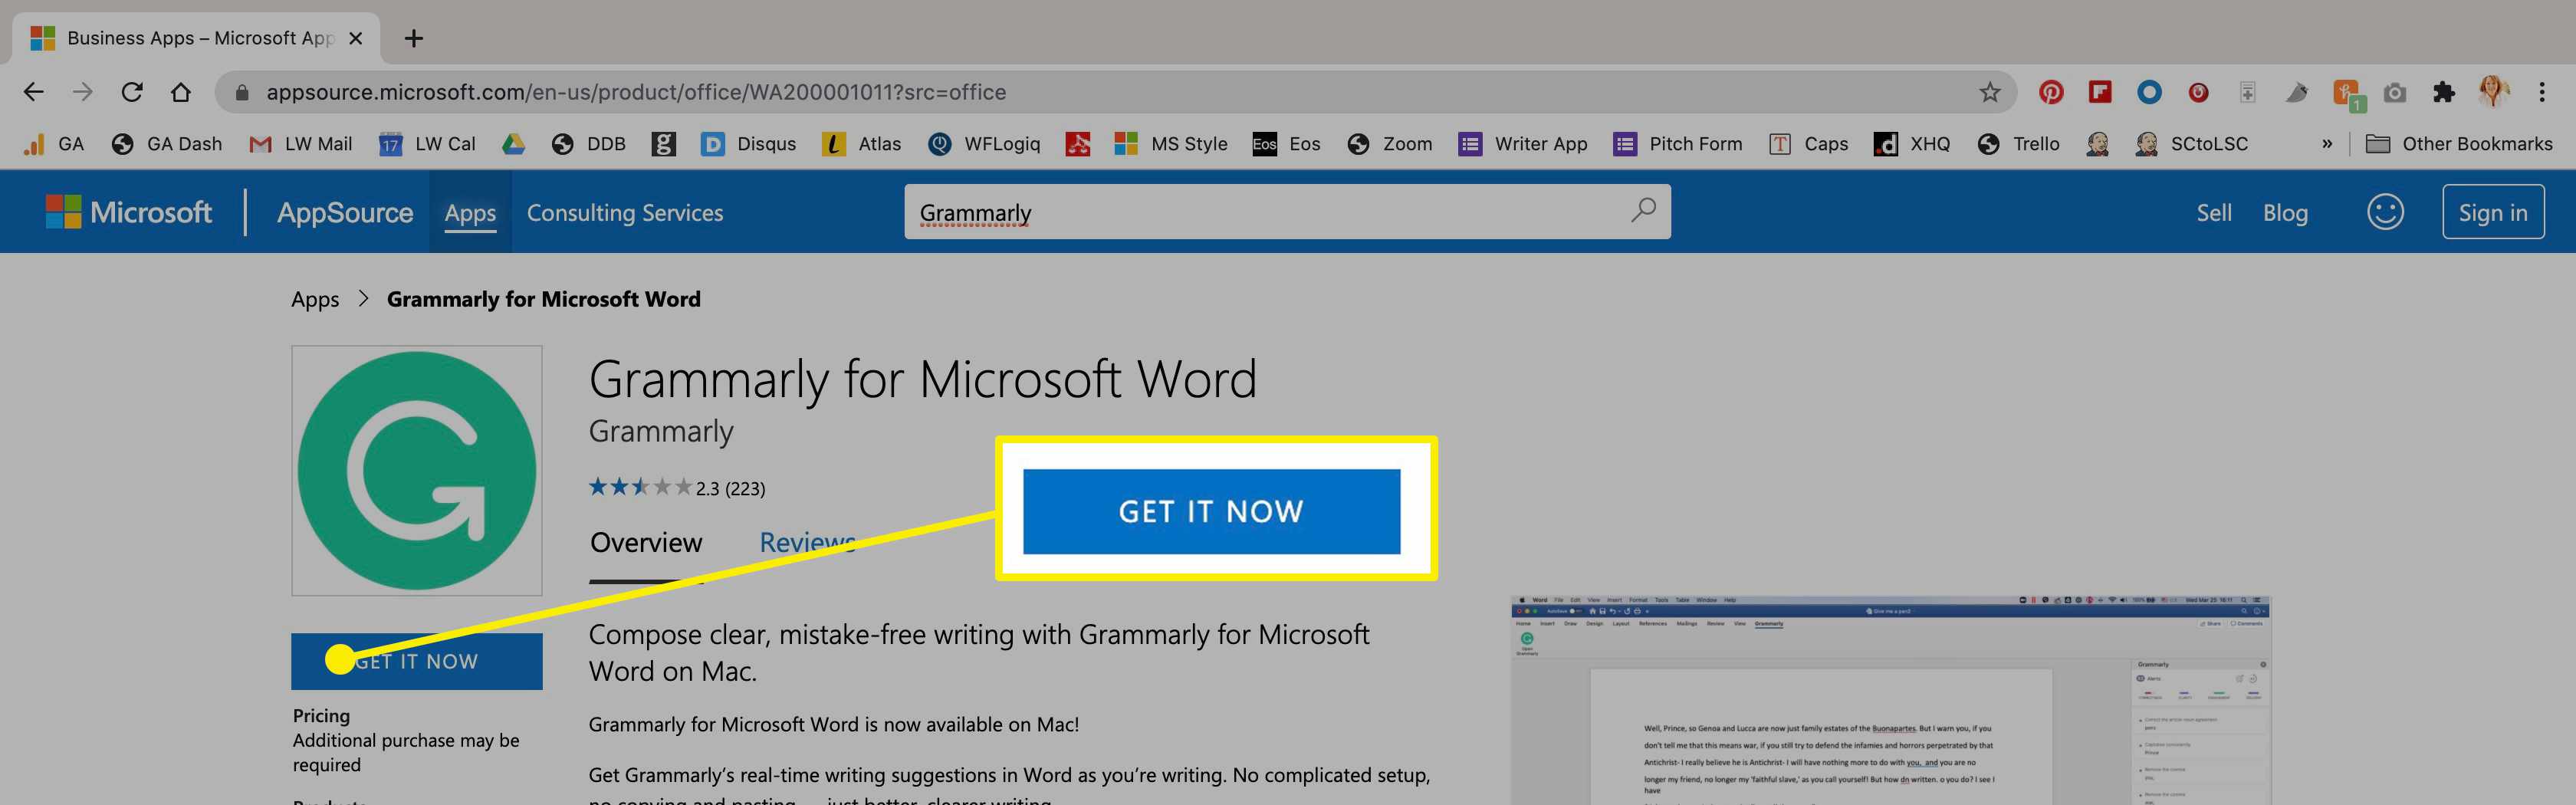 Grammarly-appen i Microsoft Store på Mac.